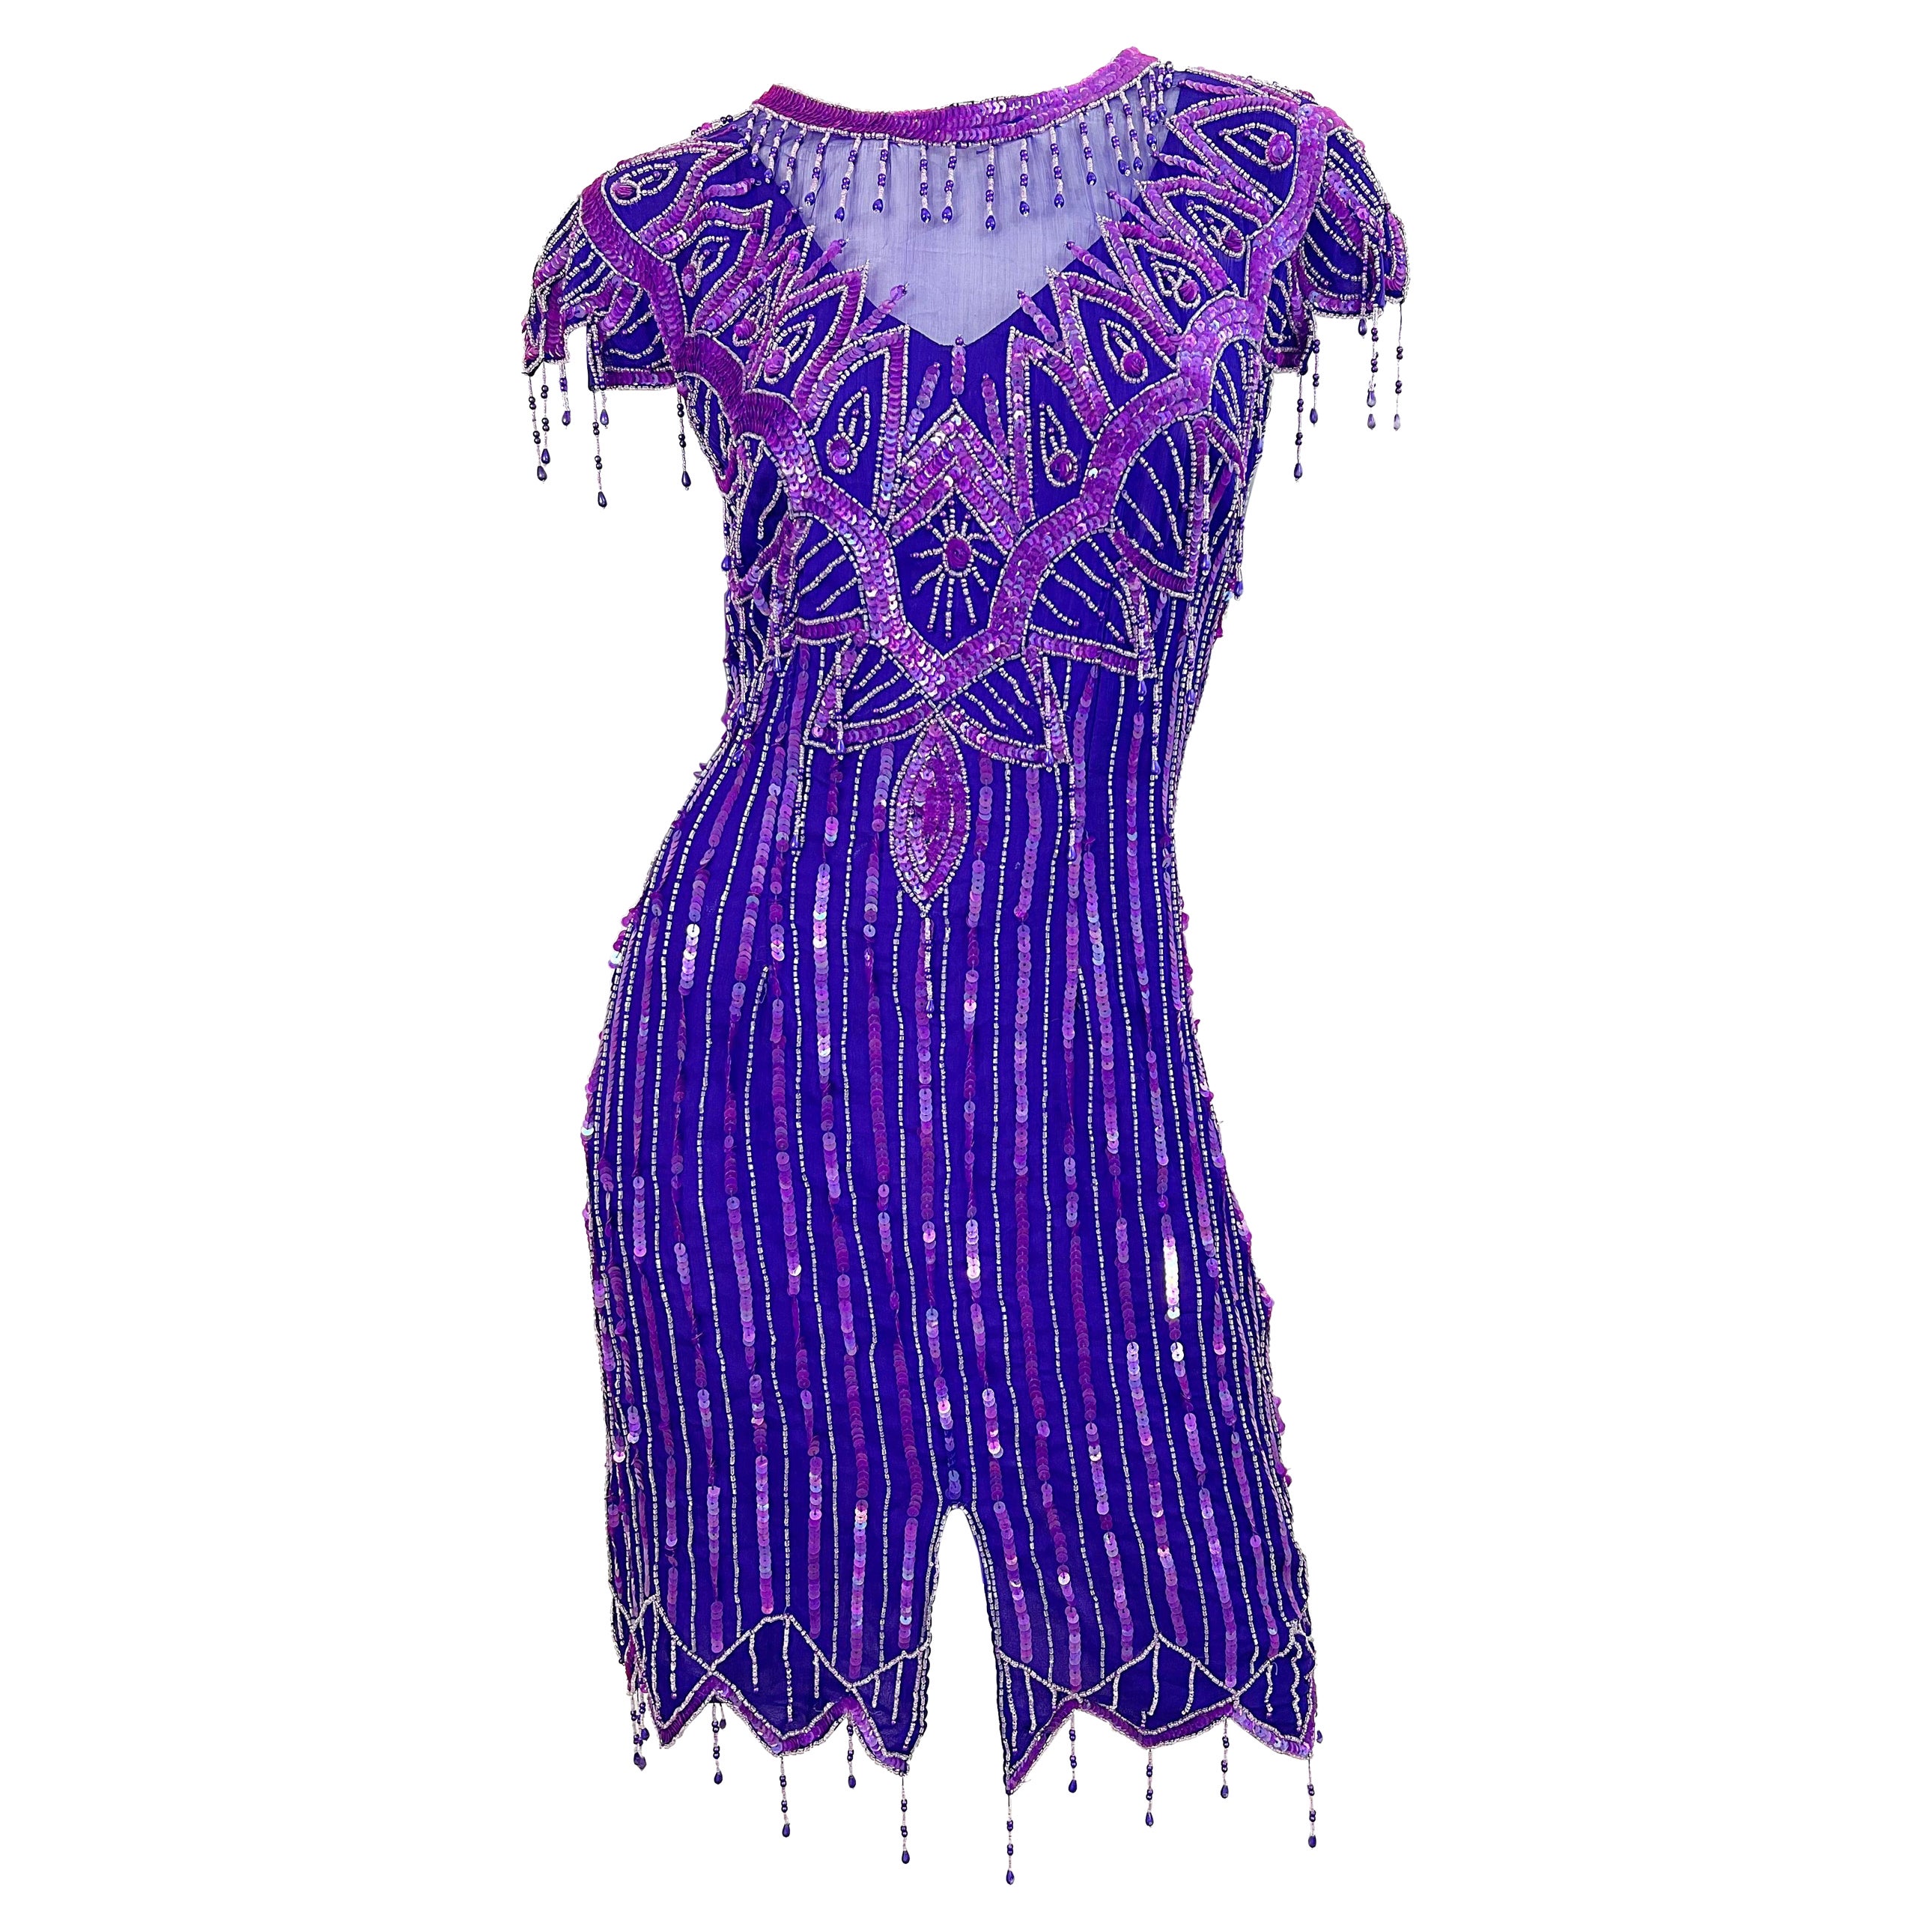 1980s Purple Silk Beaded Sequin Large Size Flapper Style Vintage 80s Dress